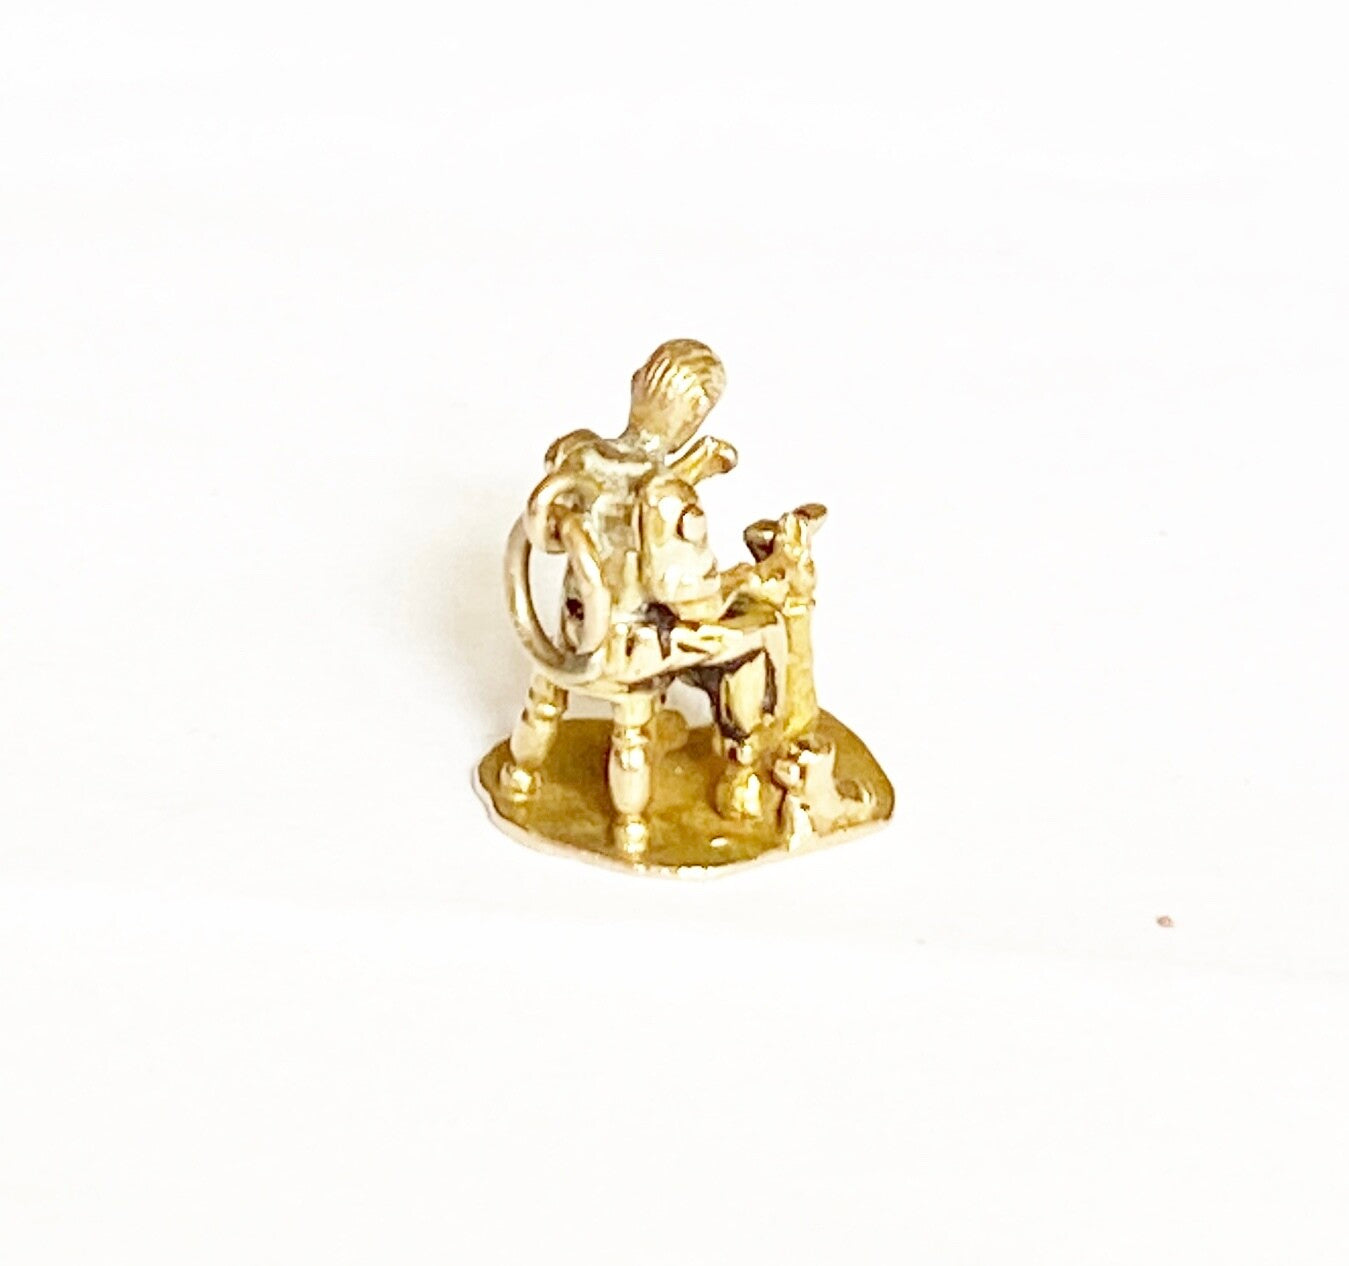 9ct 375 vintage gold articular cobbler charm by Georg Jensen circa 1958